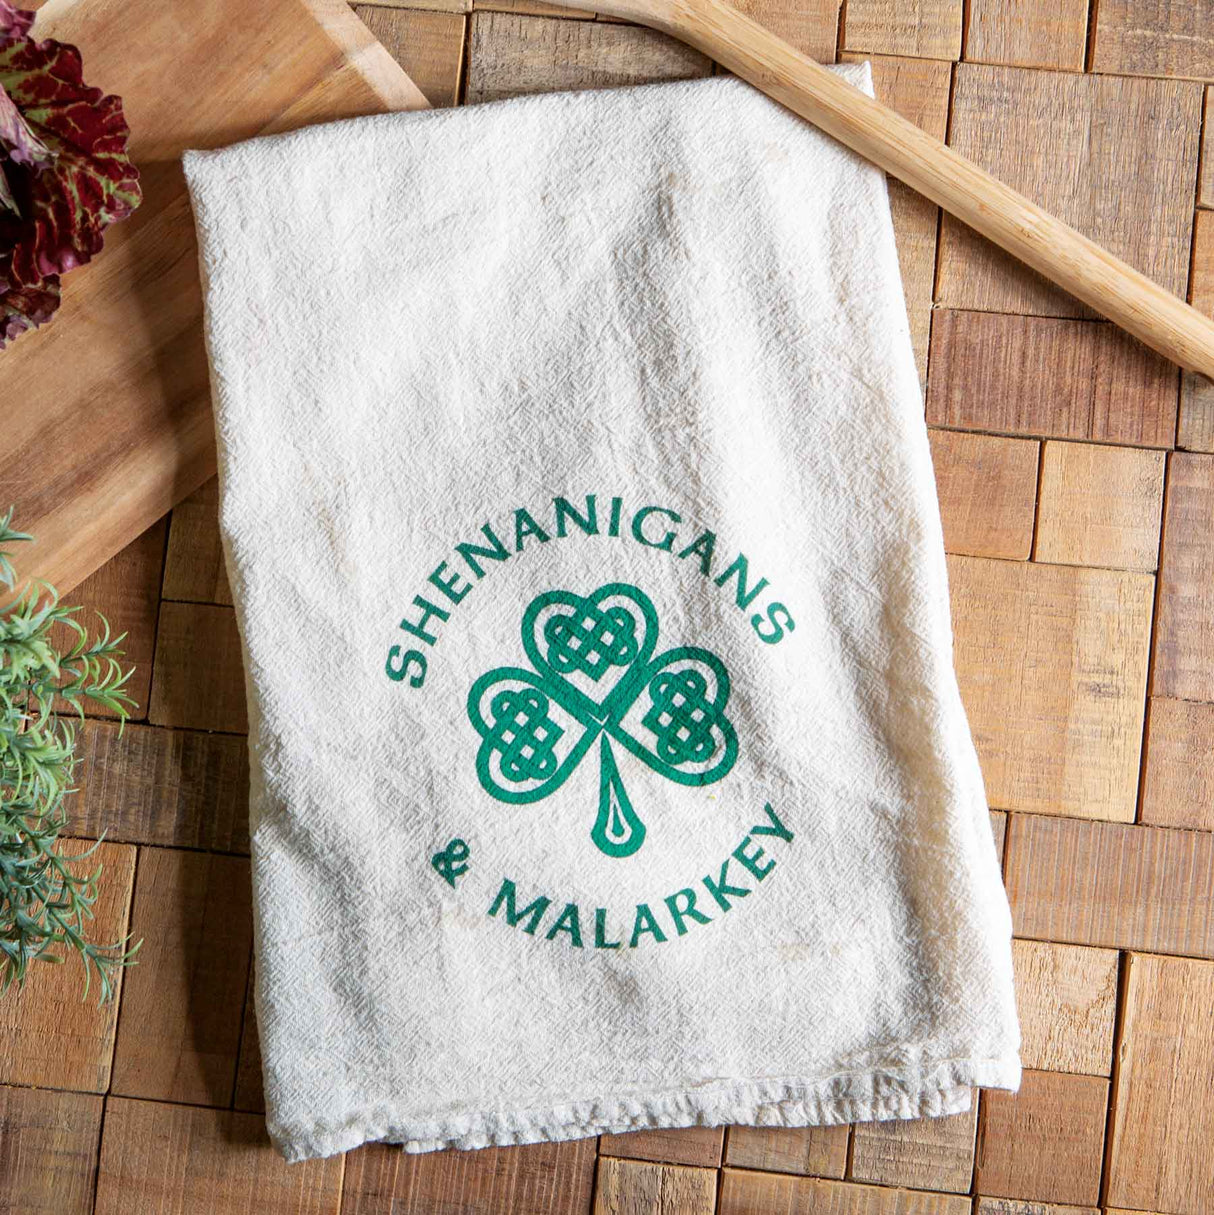 Shenanigans and Malarkey Tea Towel - Creative Irish Gifts